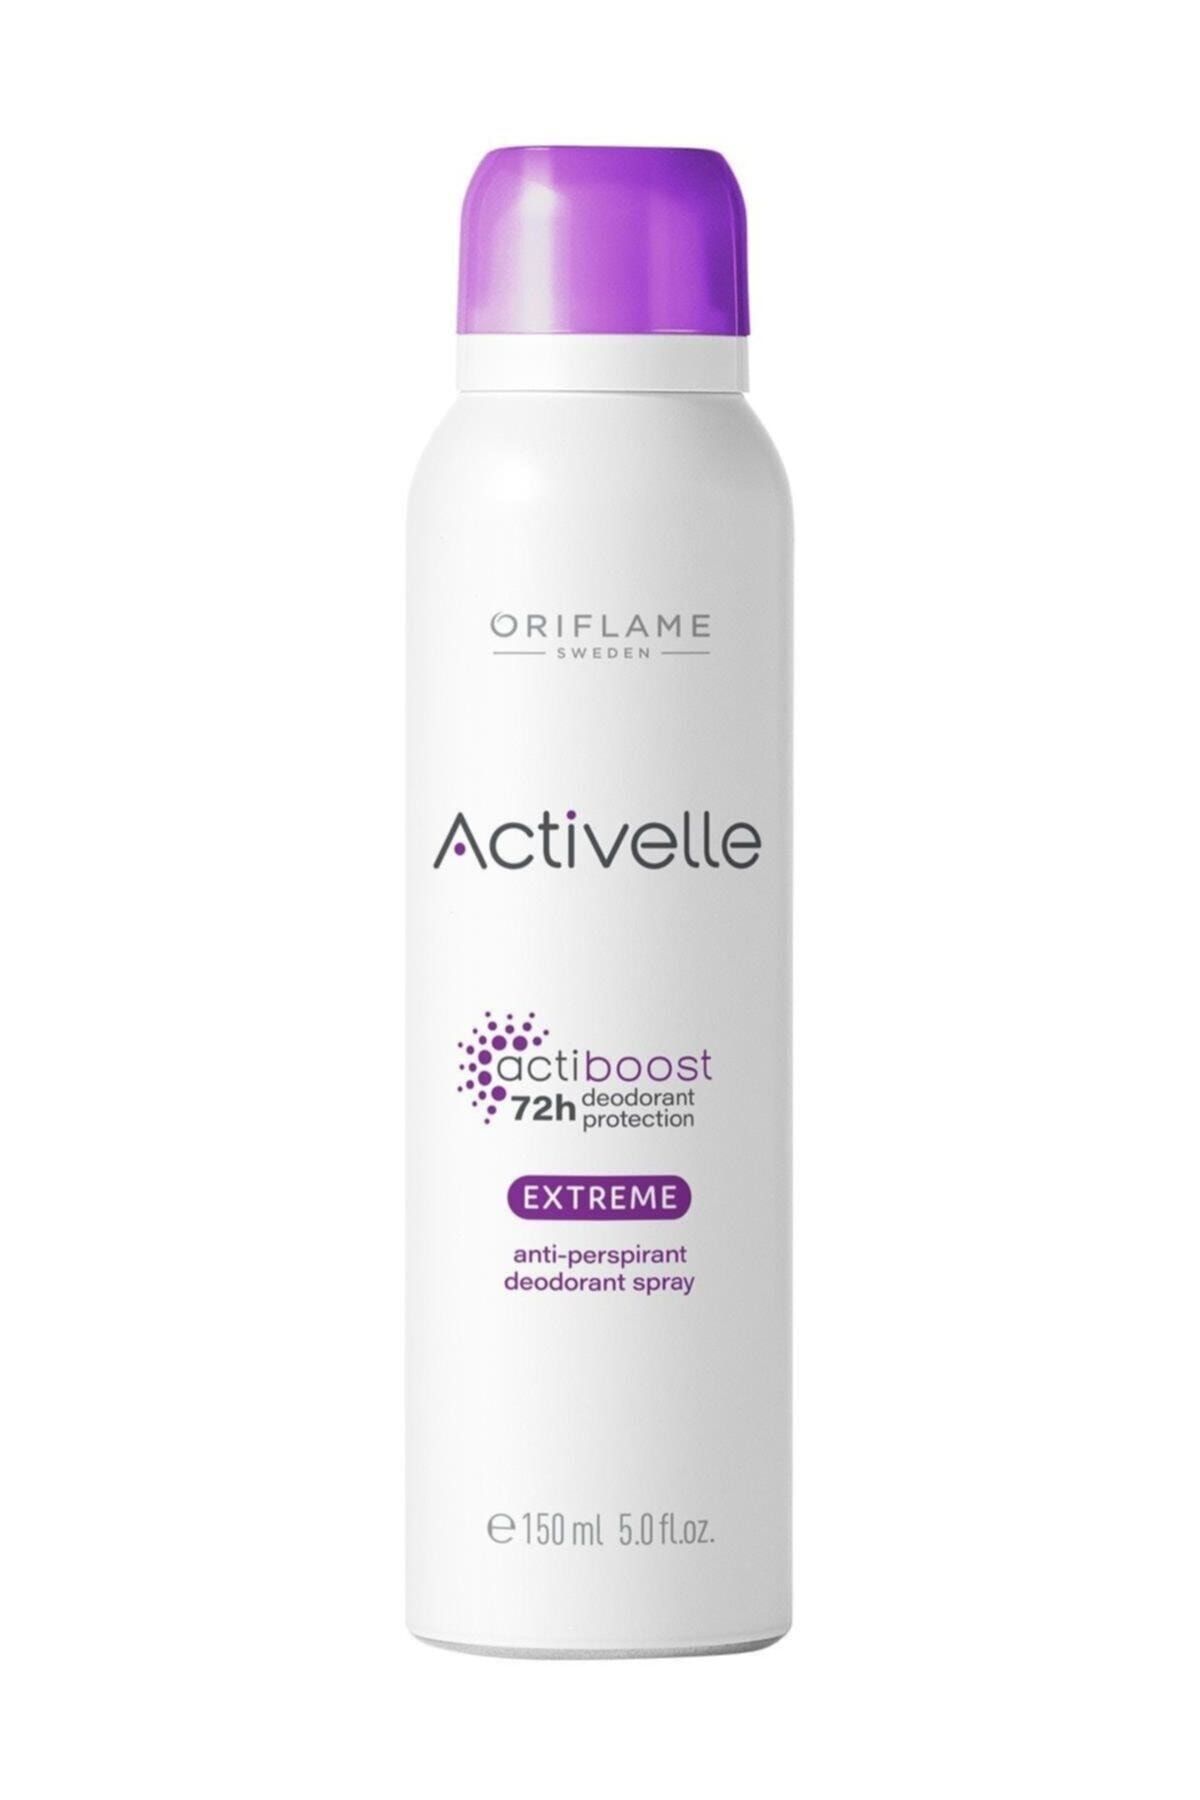 Oriflame Activelle Eventone Anti-perspirant Deodorant Sprey 150 ml